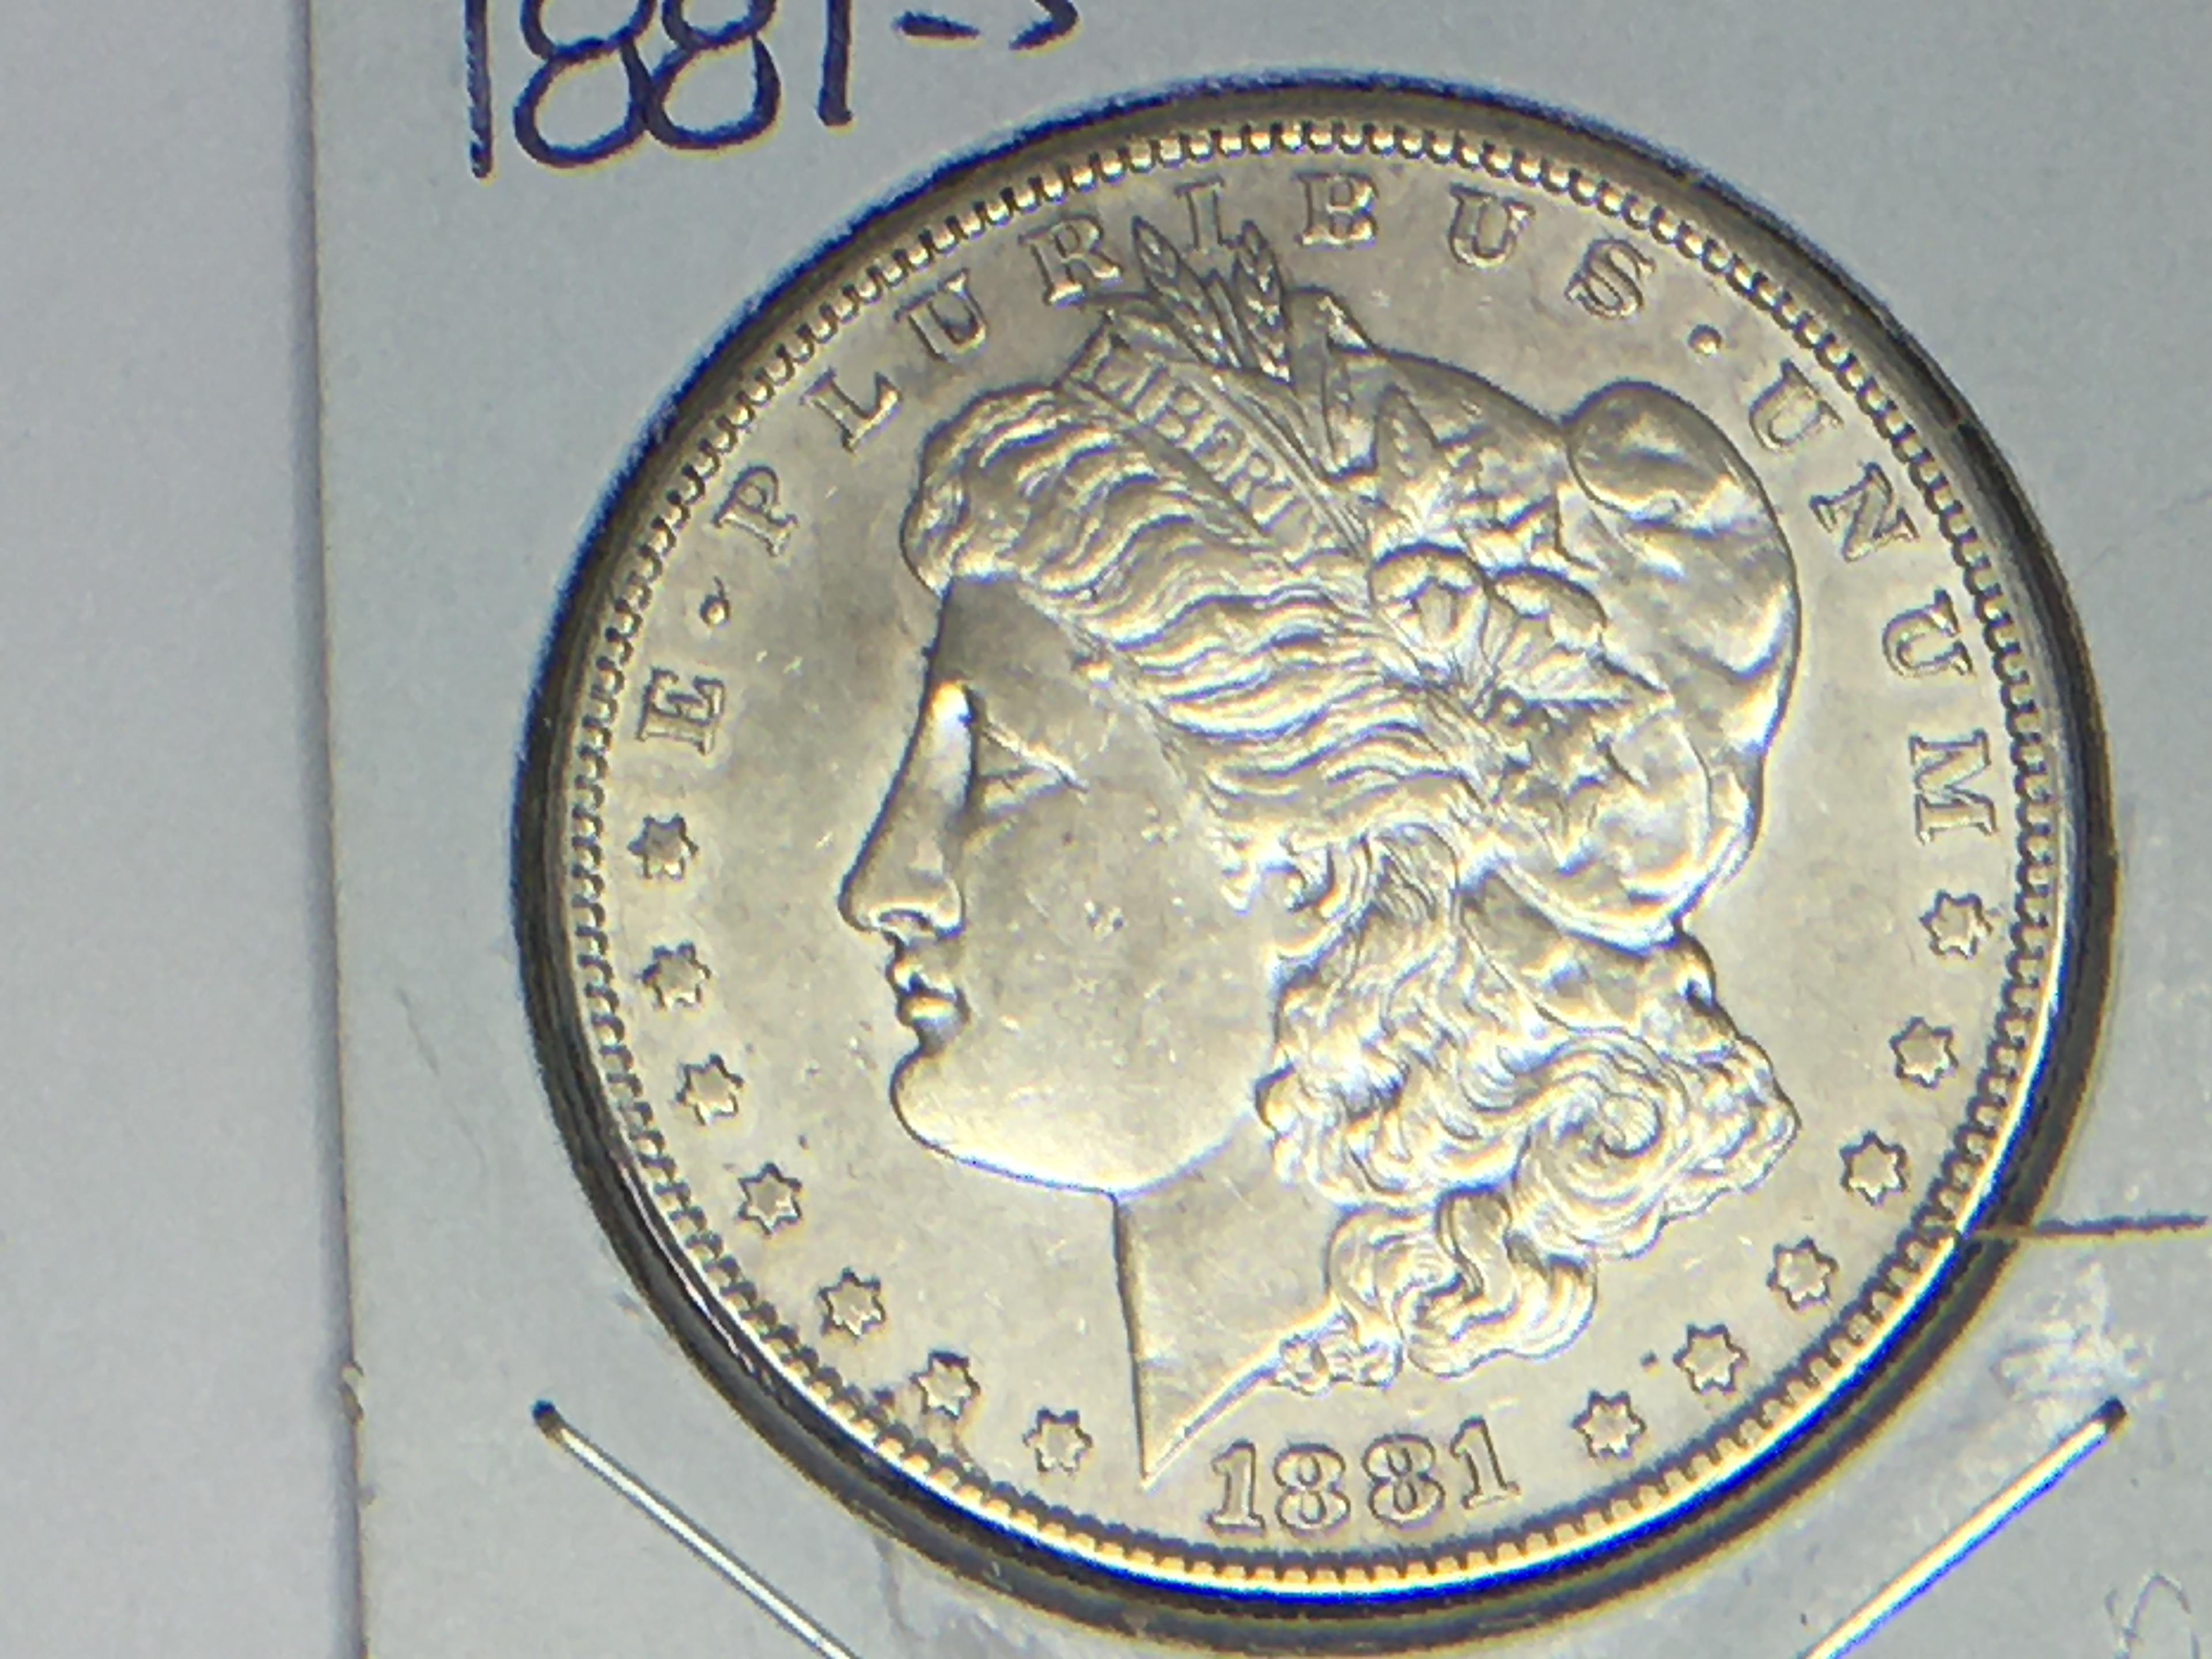 1881 S MORGAN DOLLAR